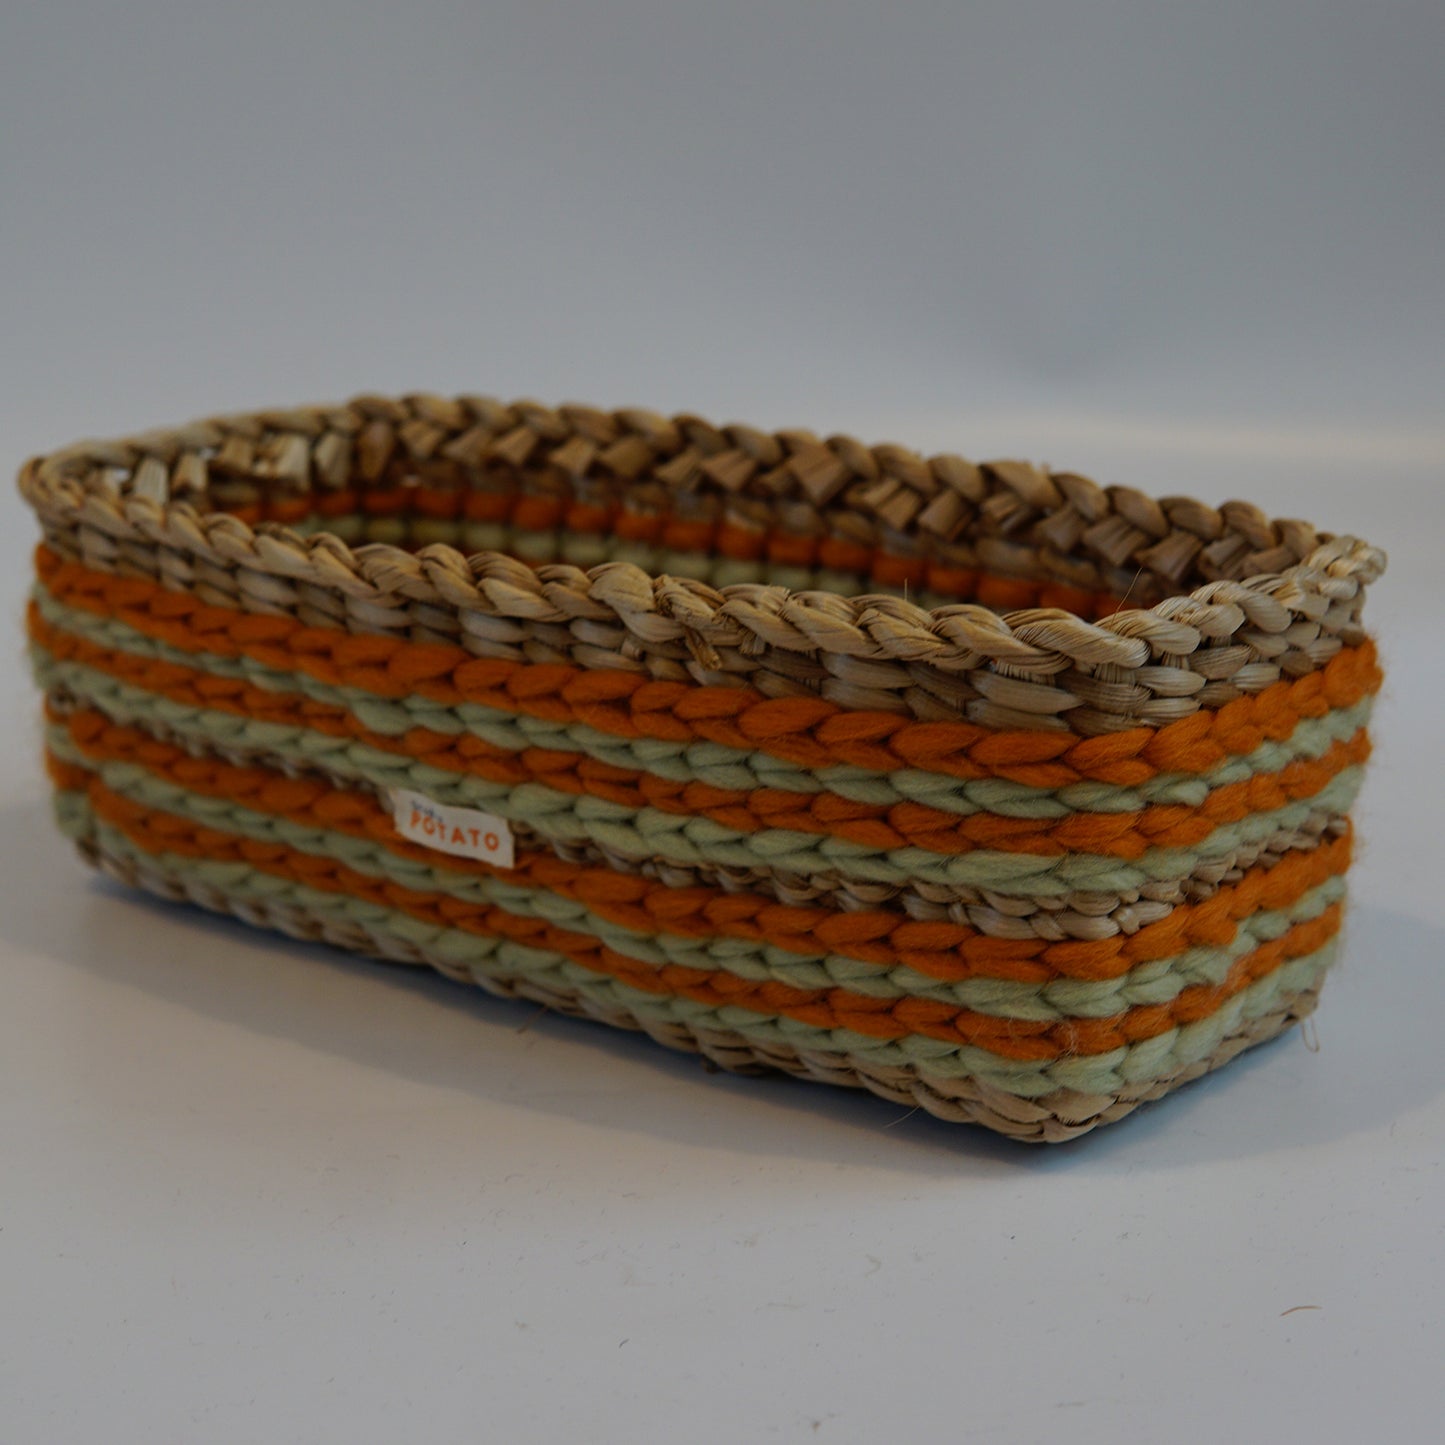 Handmade Rectangular Basket